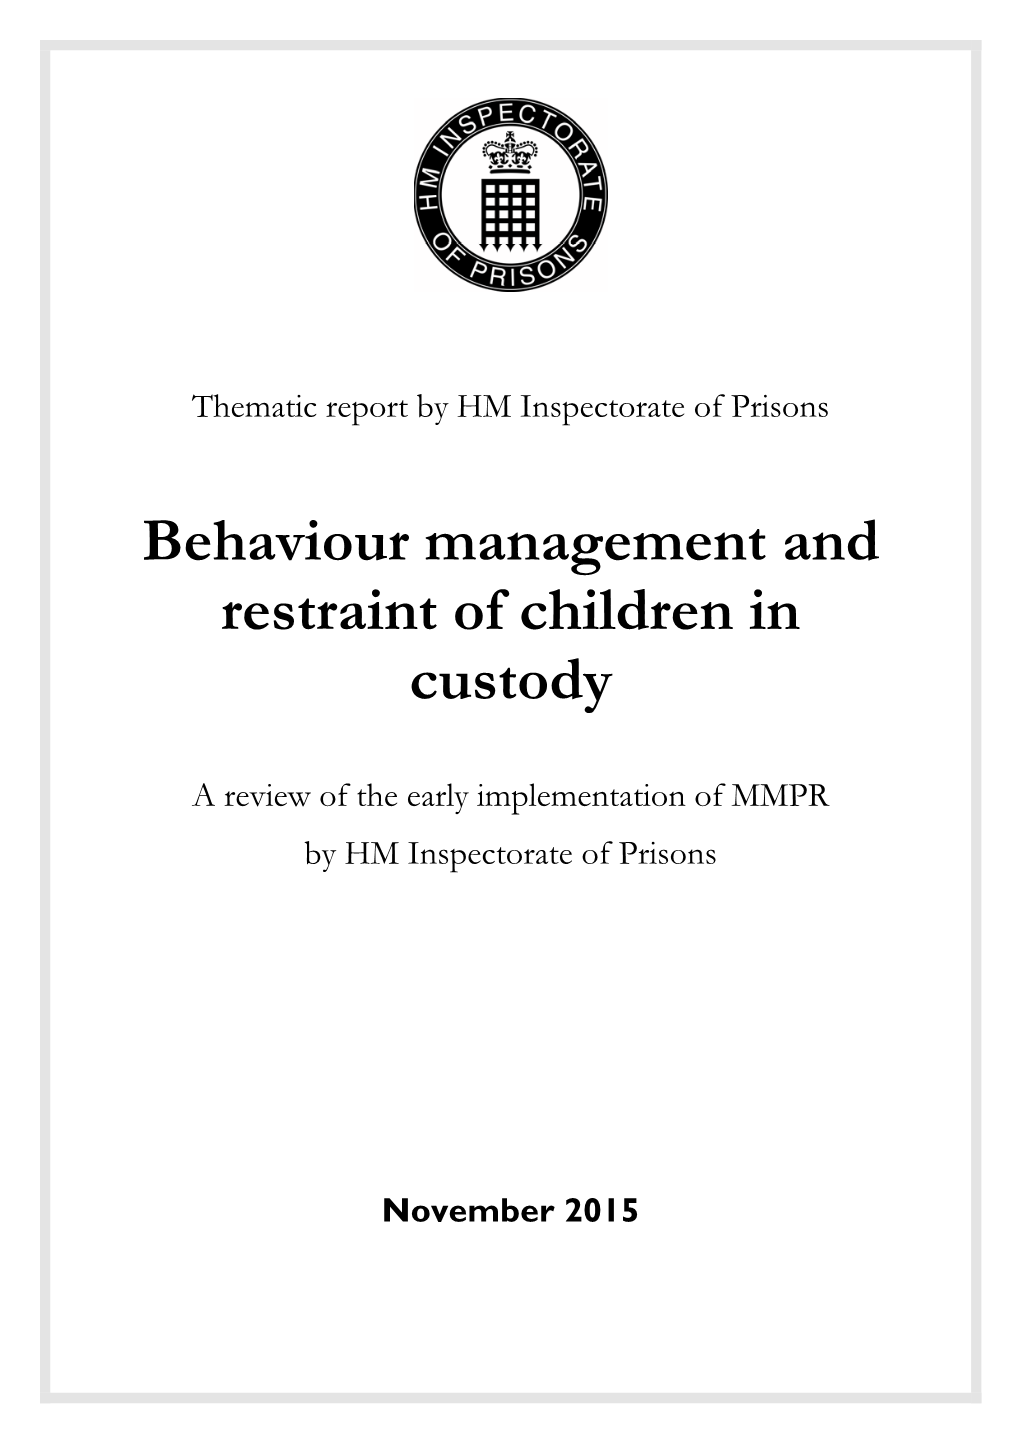 (2015) Behaviour Management and Restraint of Children in Custody